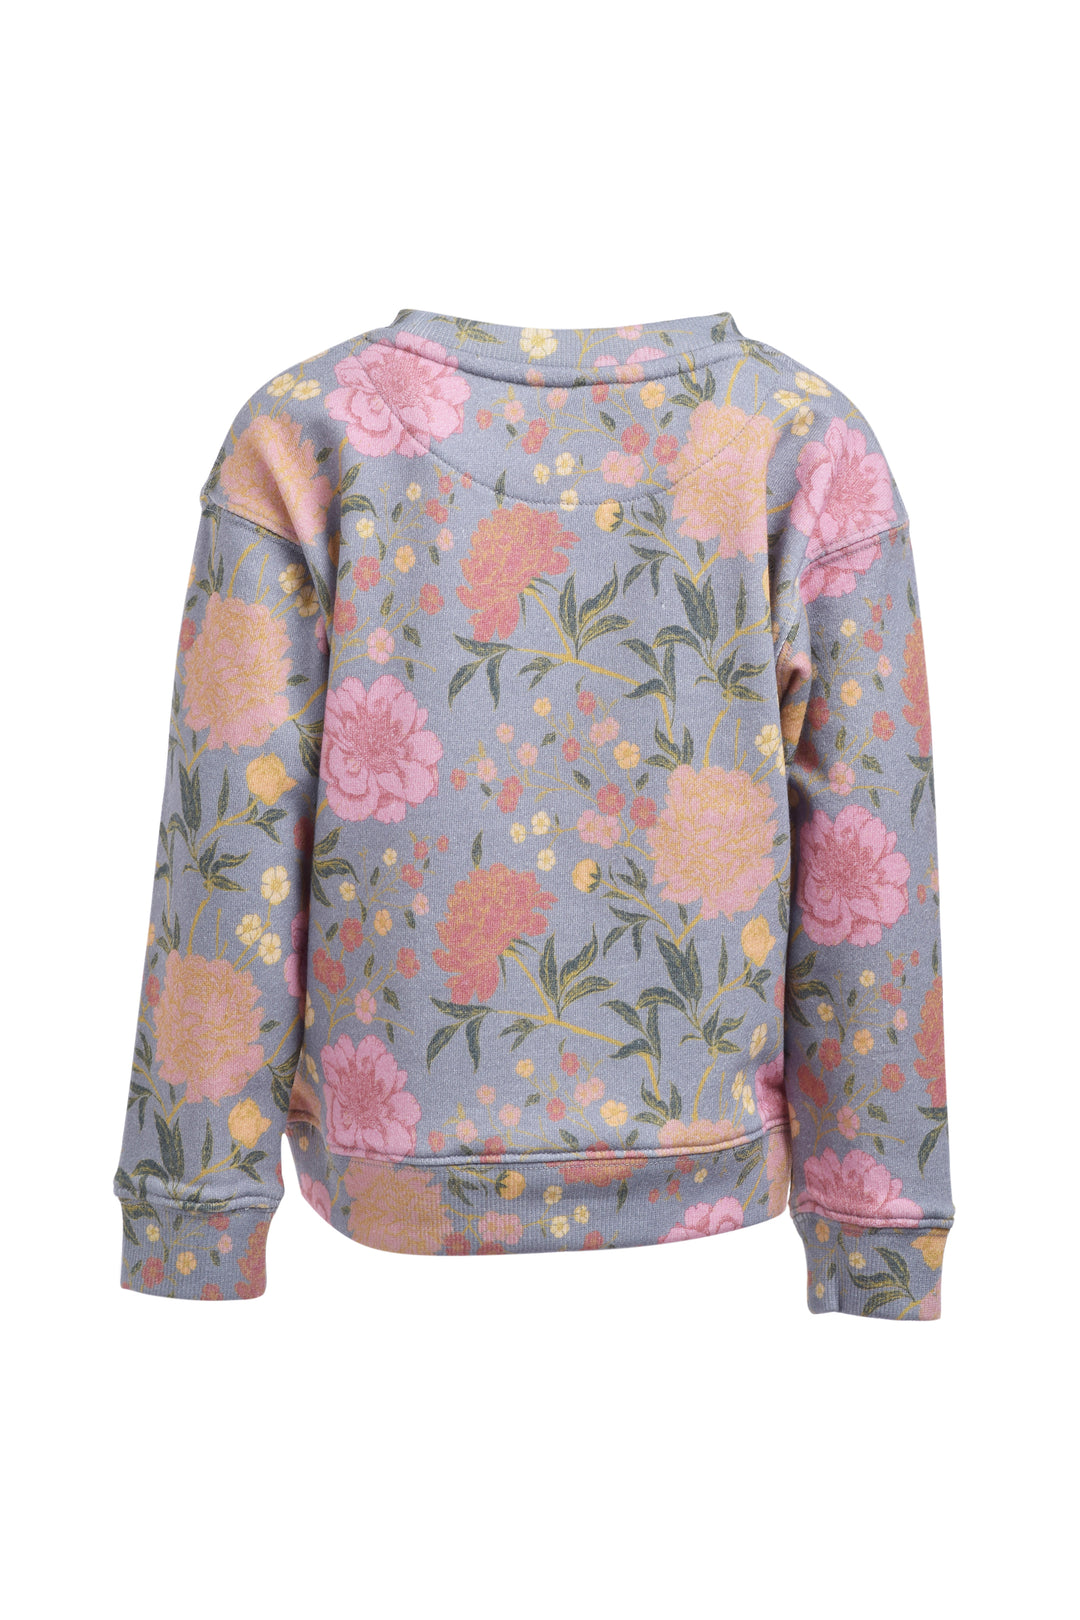 French Cotton Crewneck Sweater [Kids]